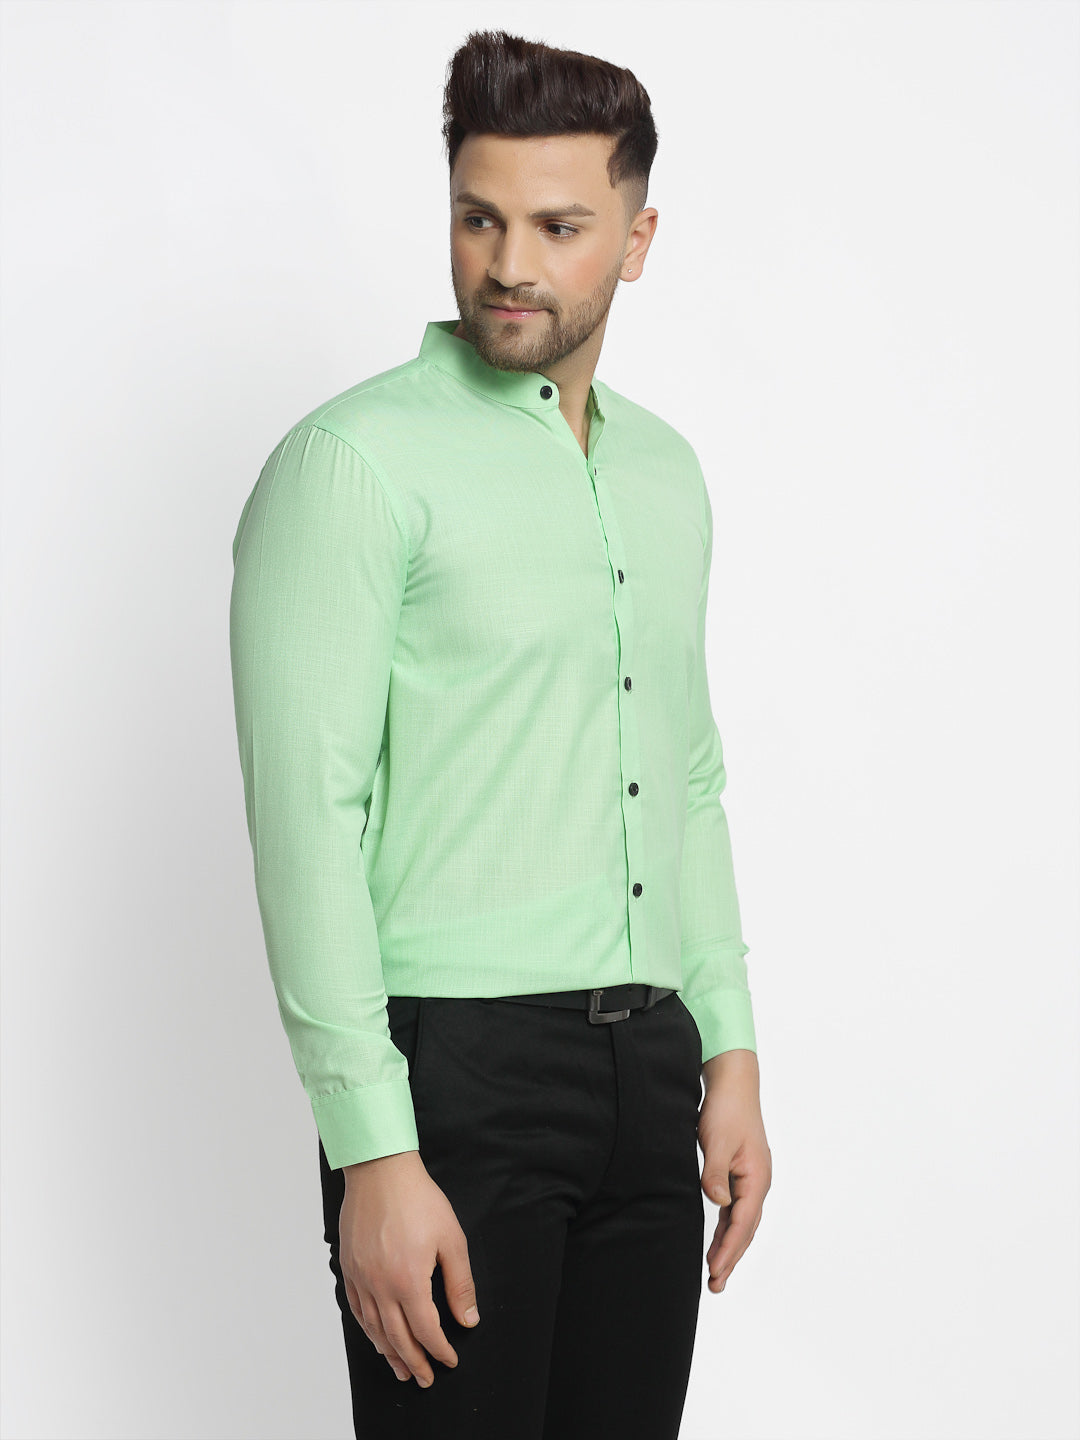 Men's Green Cotton Solid Mandarin Collar Formal Shirts ( SF 726Light-Green ) - Jainish